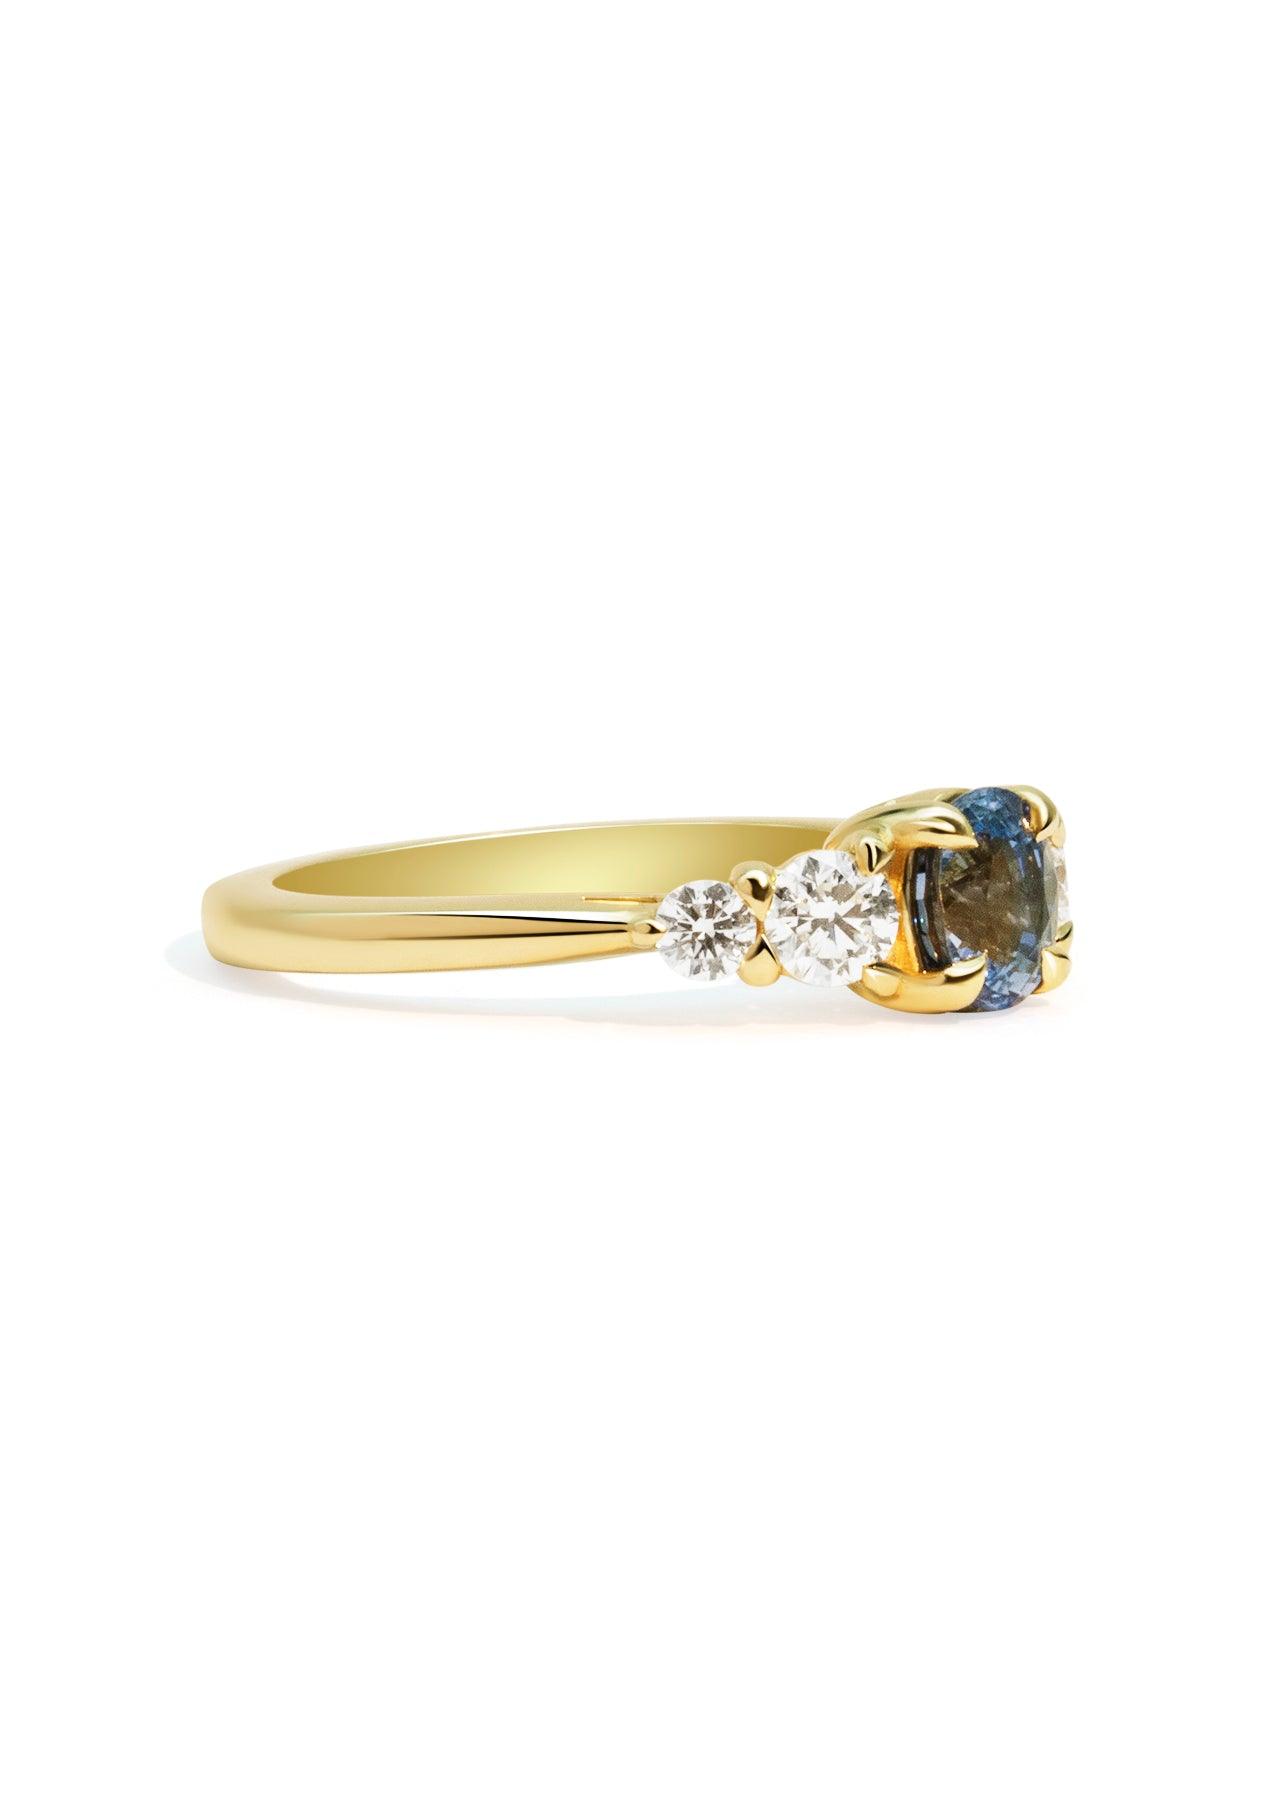 The Vera 1.01ct Ceylon Sapphire Ring